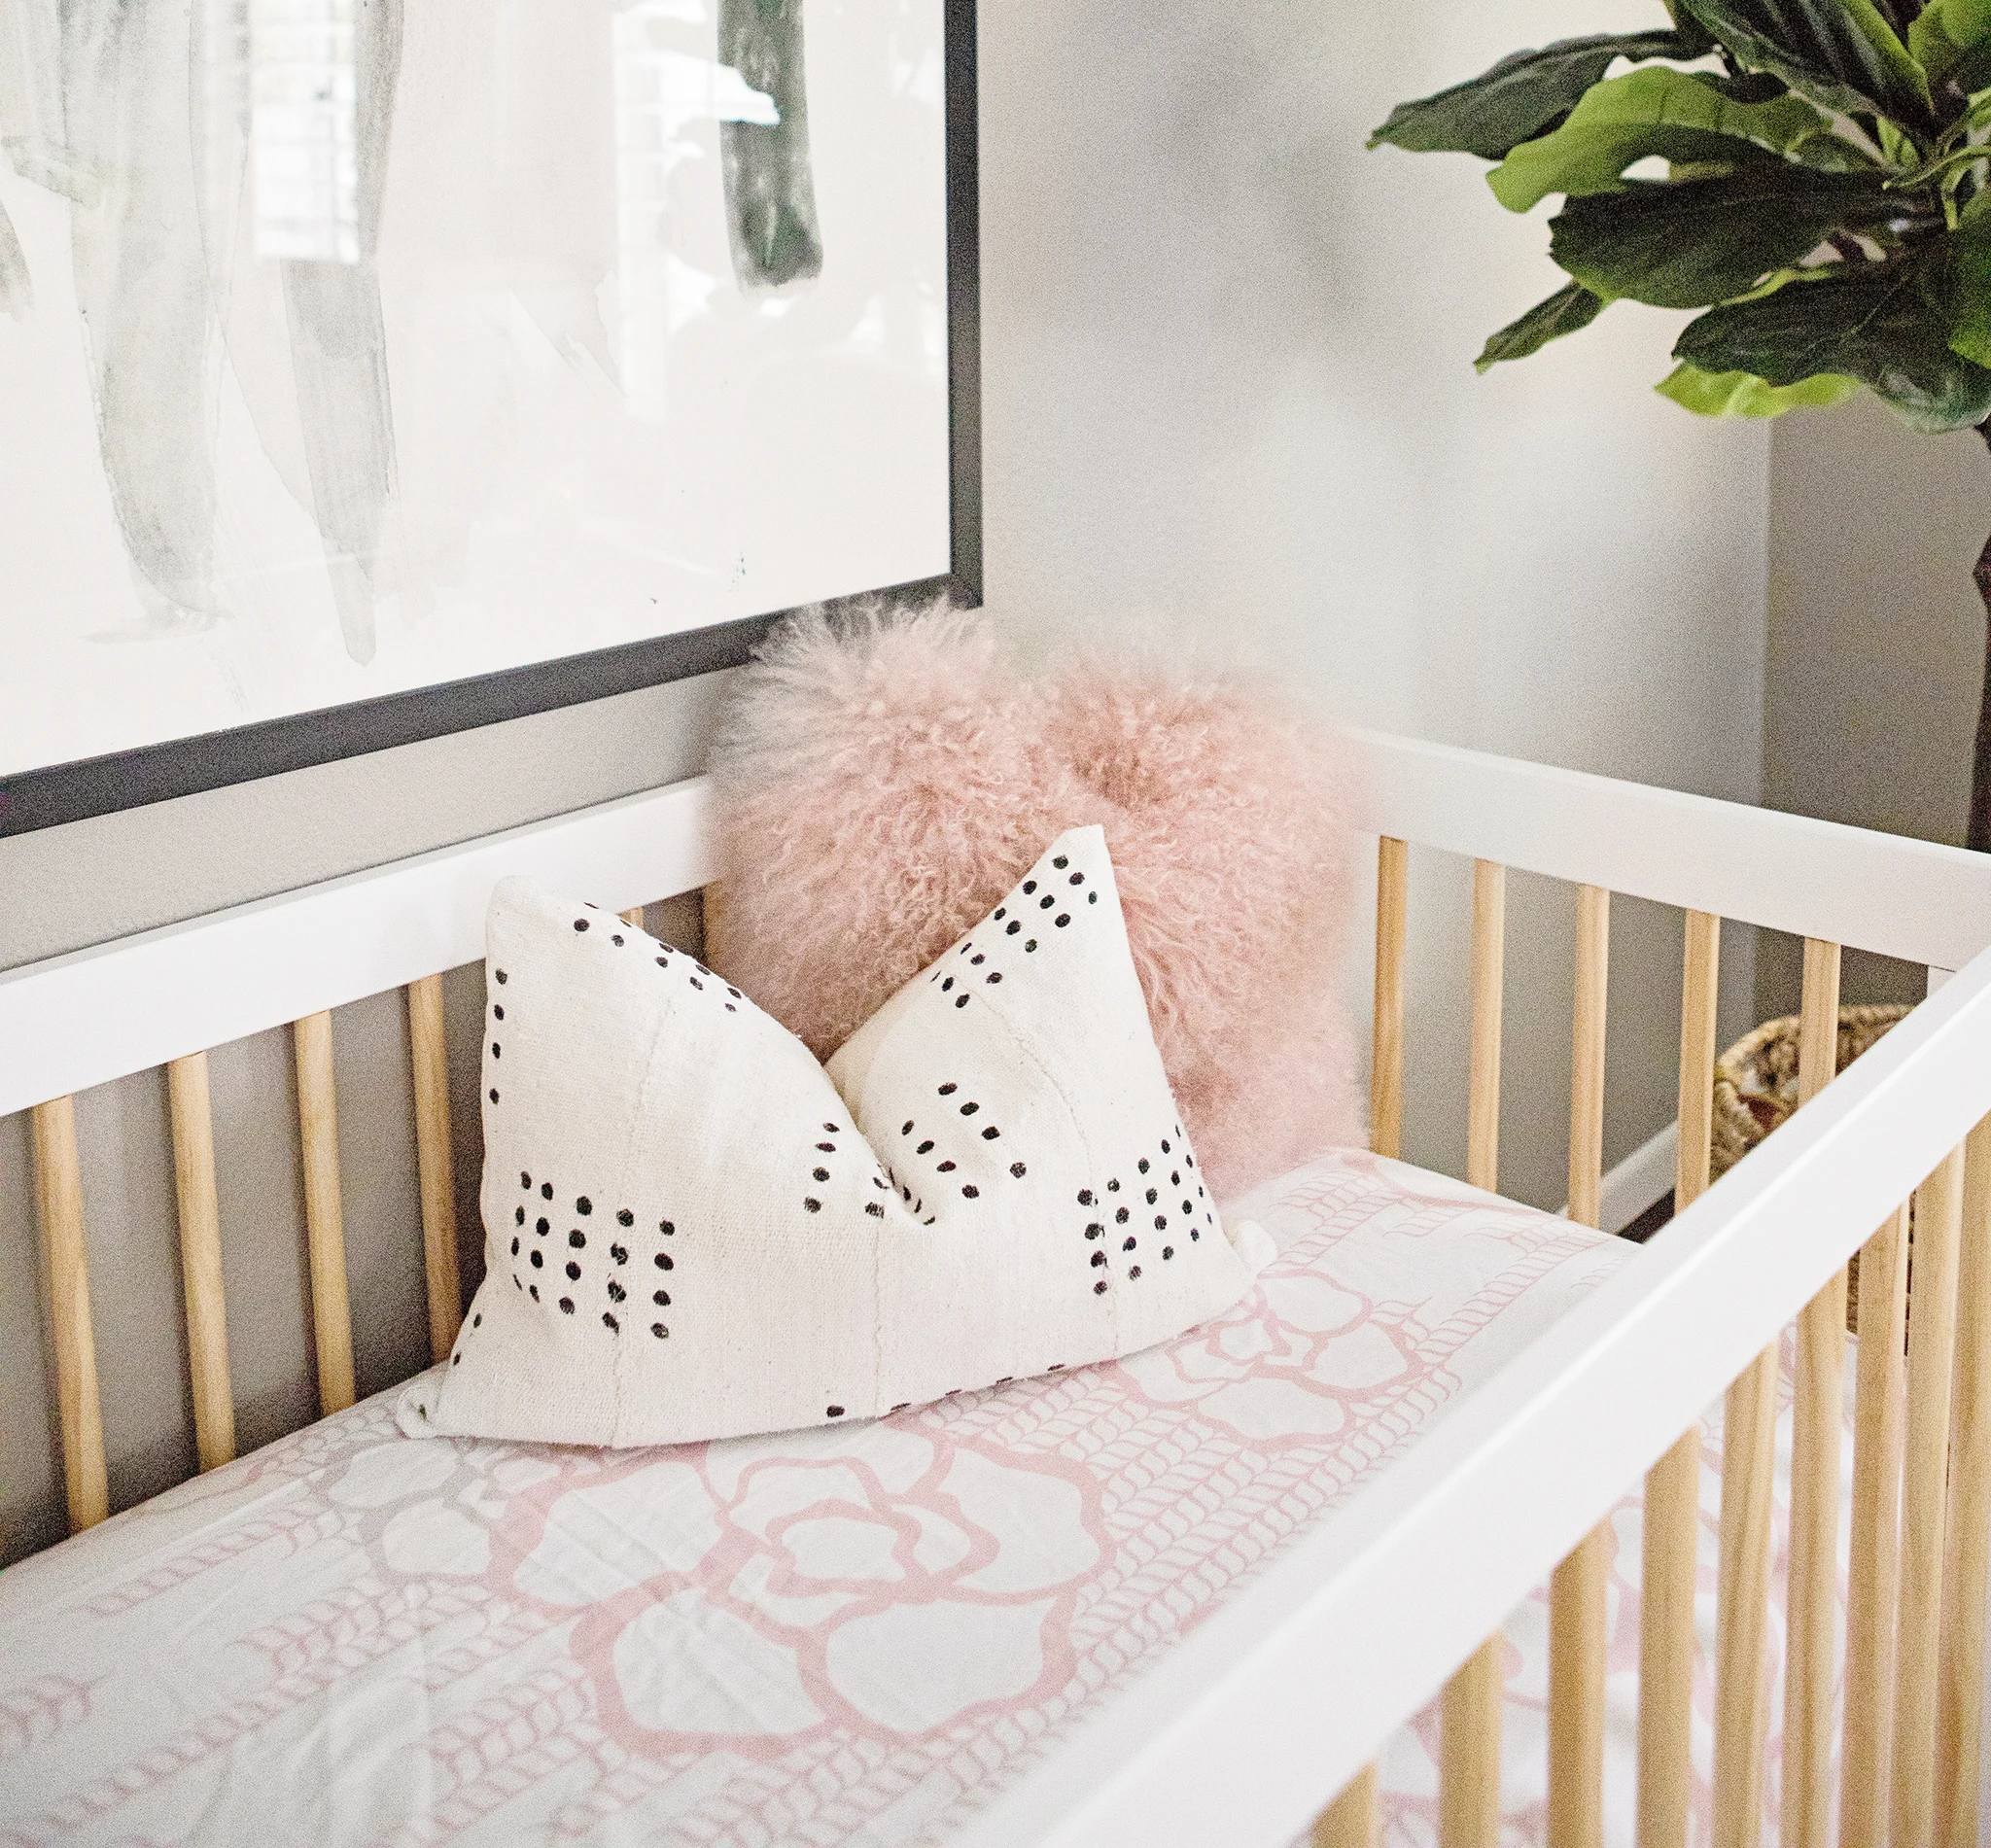 Oilo Capri Crib Bedding in Kailee Wright's Nursery - Project Nursery